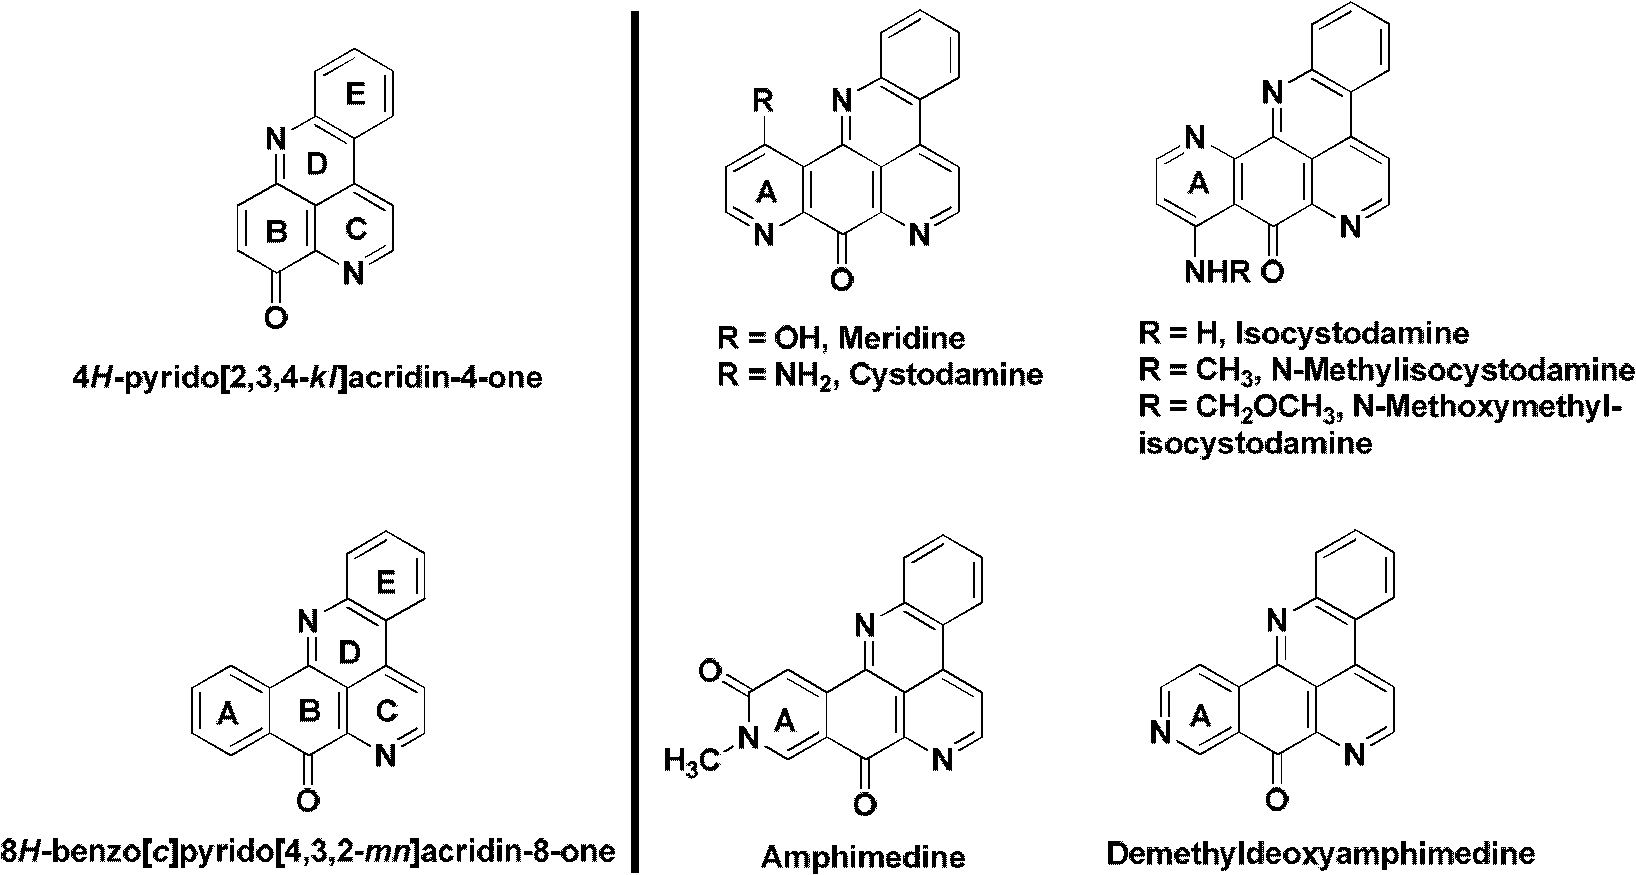 Method for synthesizing benzo[c]pyridine[4,3,2-mn]acridine-8-one